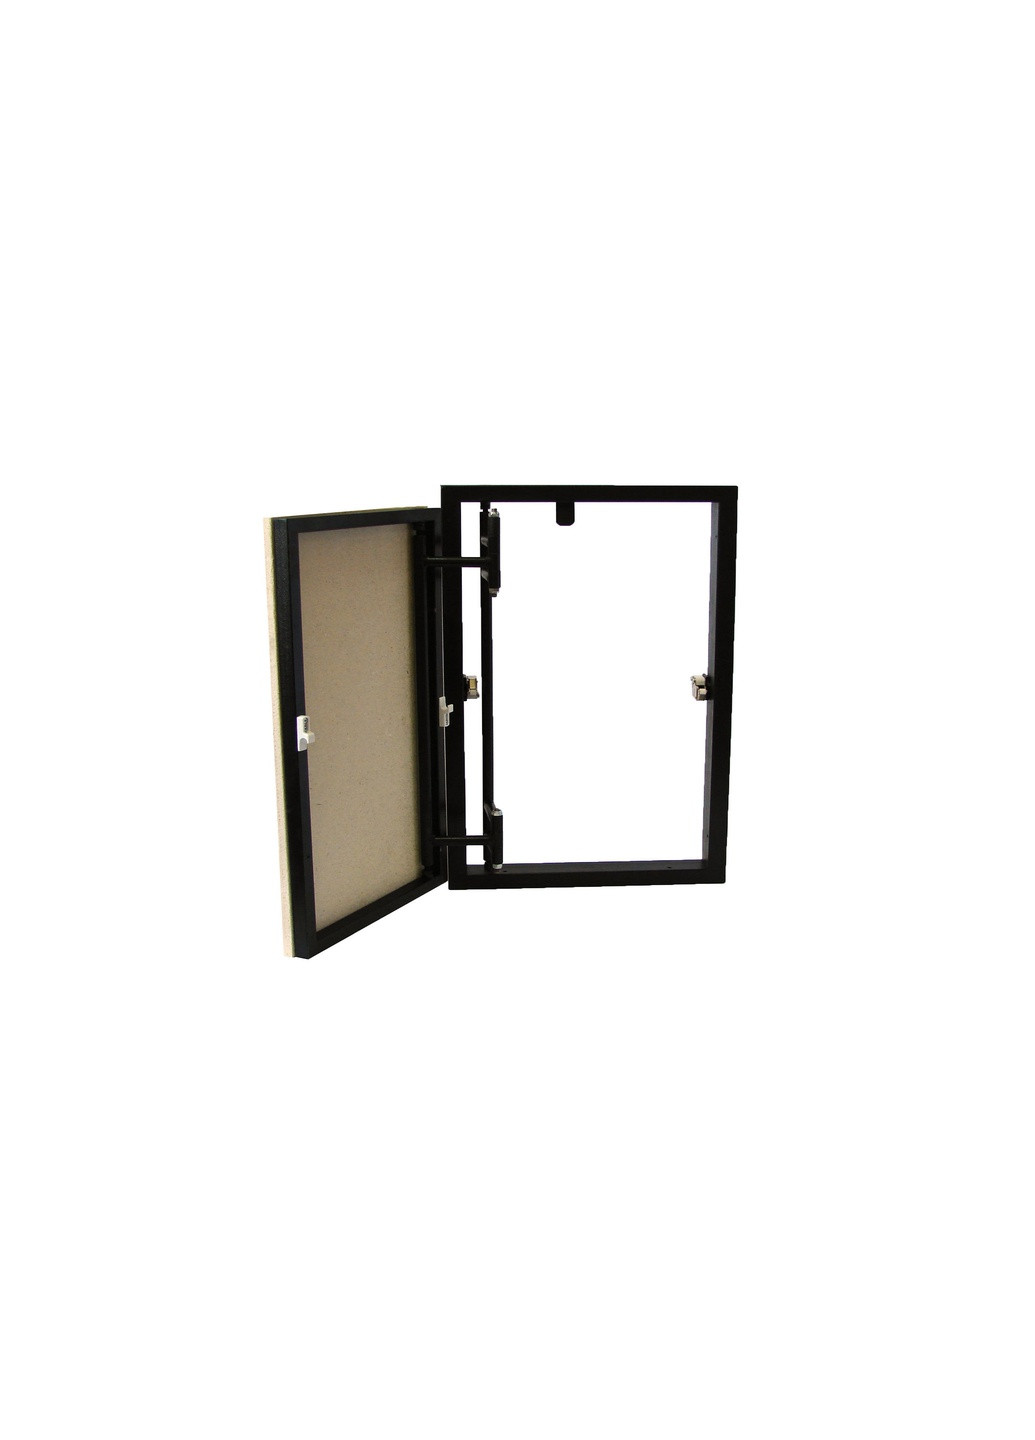 Ревизионный люк скрытого монтажа под плитку нажимного типа 300x450 ревизионная дверца для плитки (1127) S-Dom (264208775)